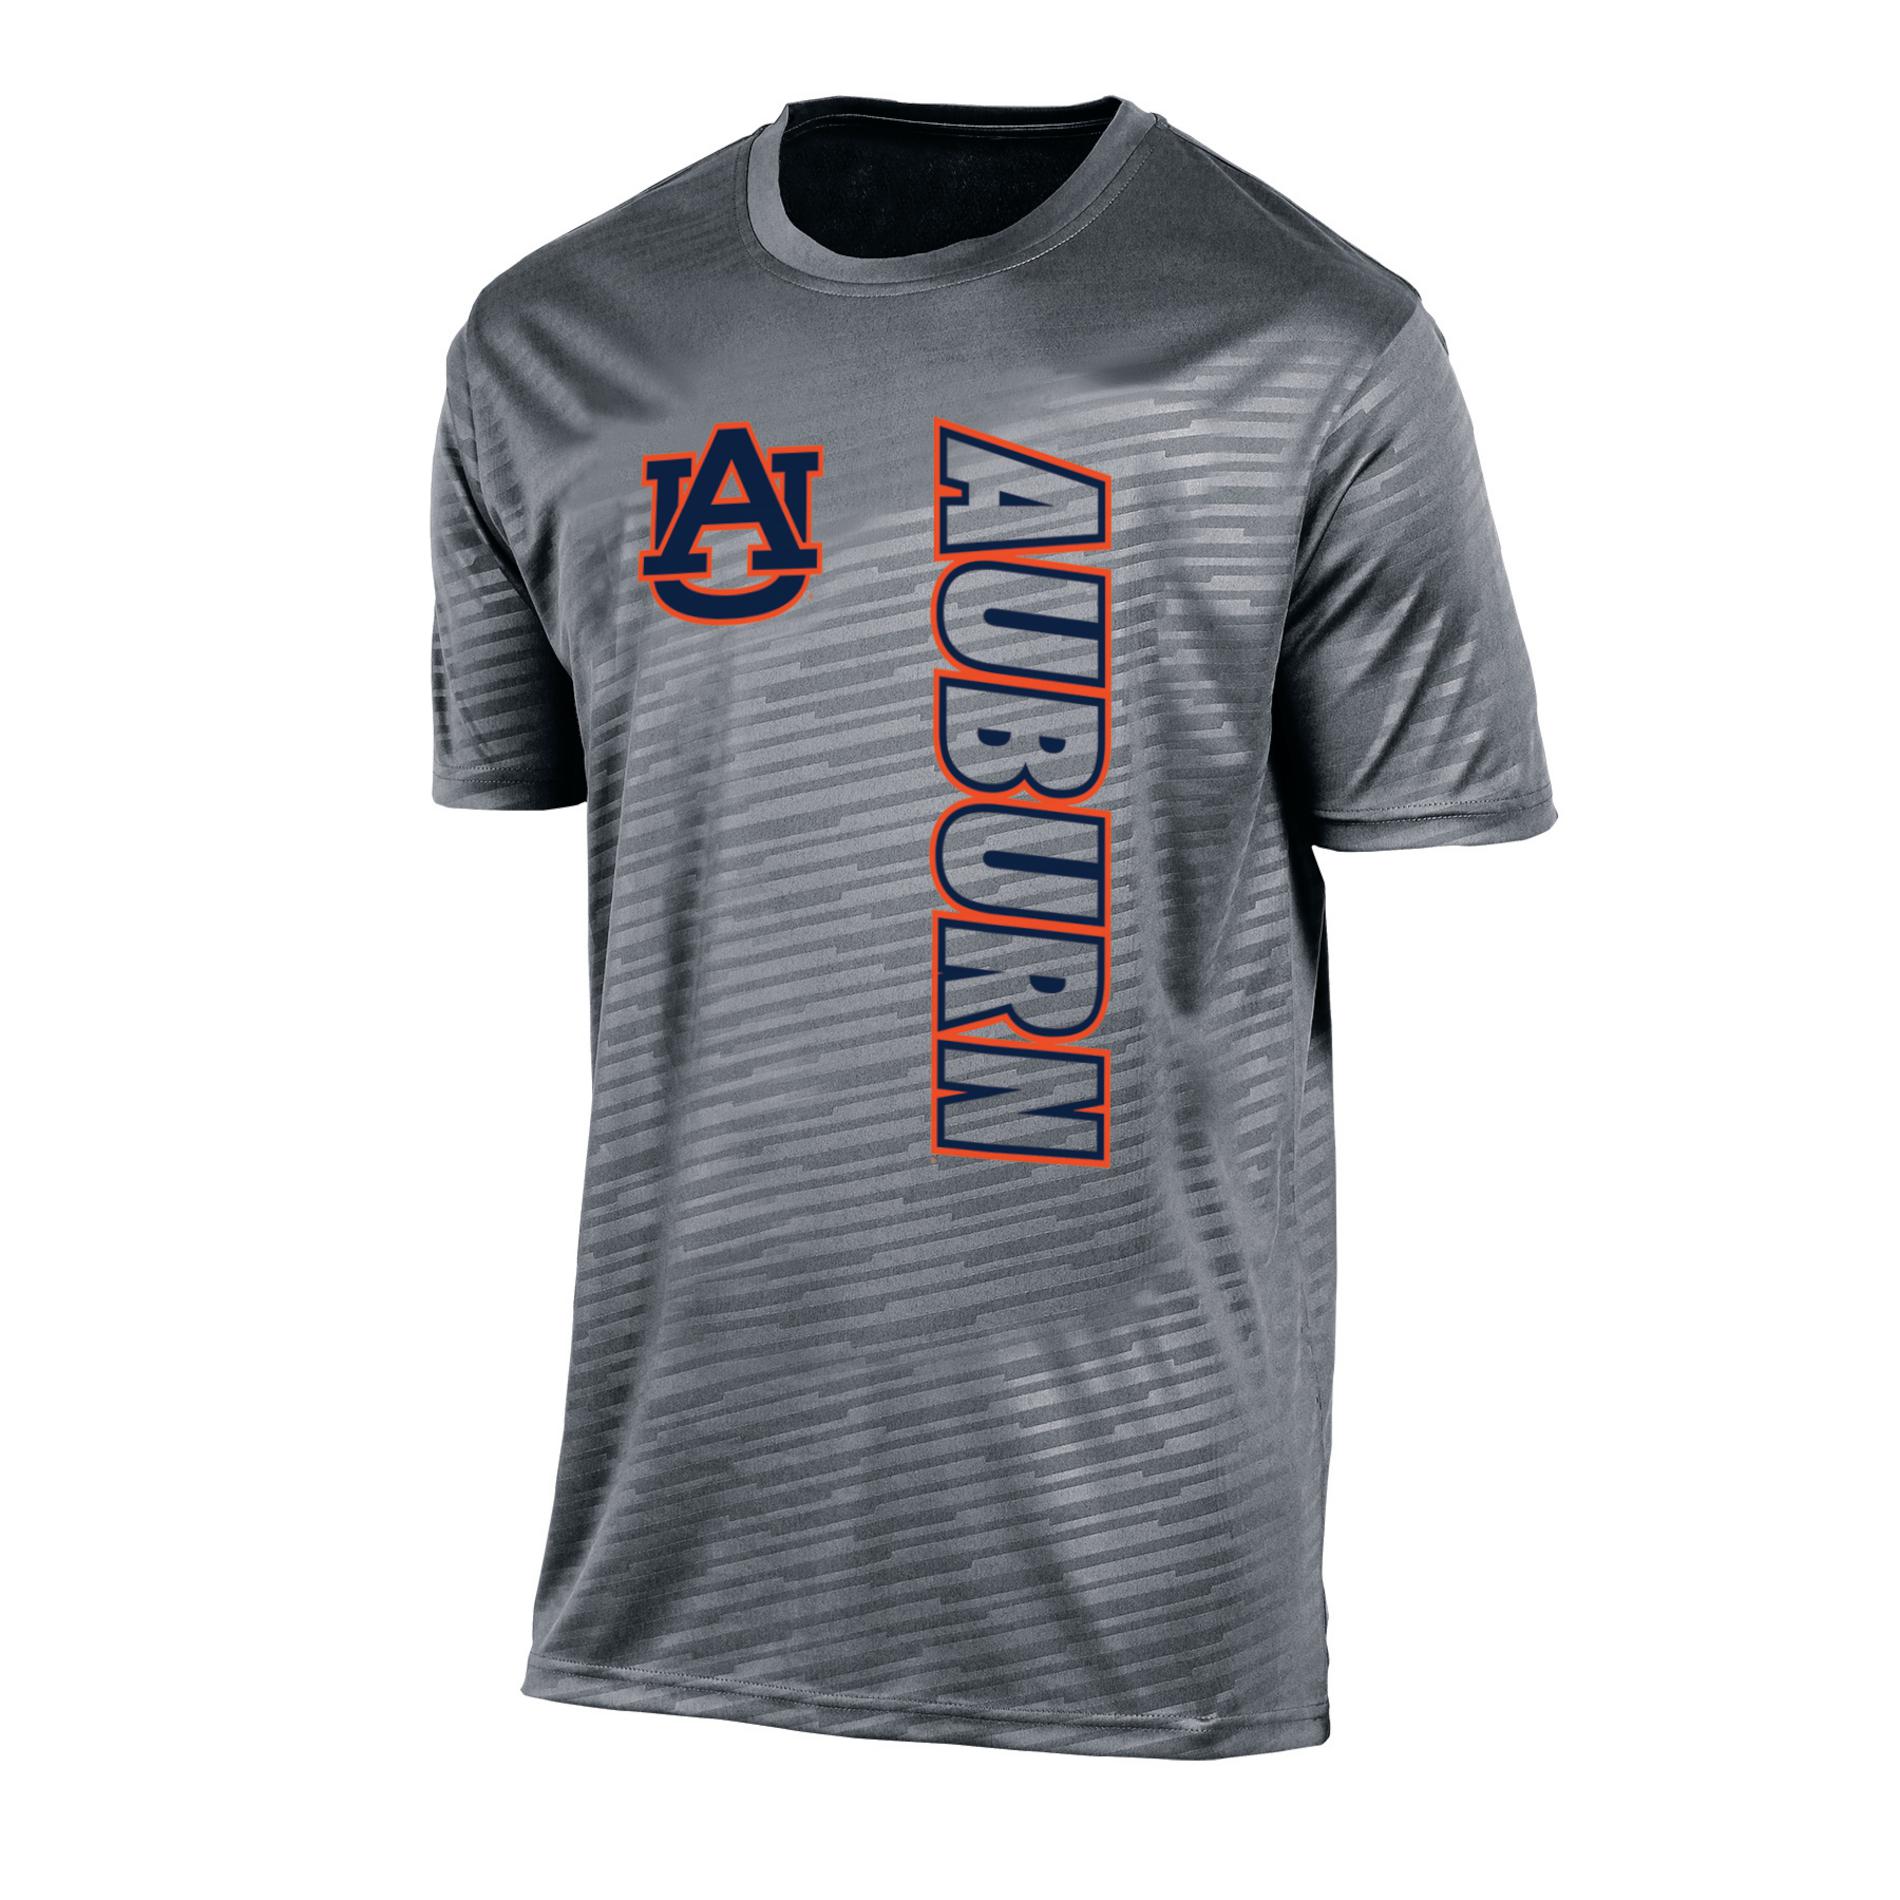 NCAA Men's Performance T-Shirt - Auburn Tigers